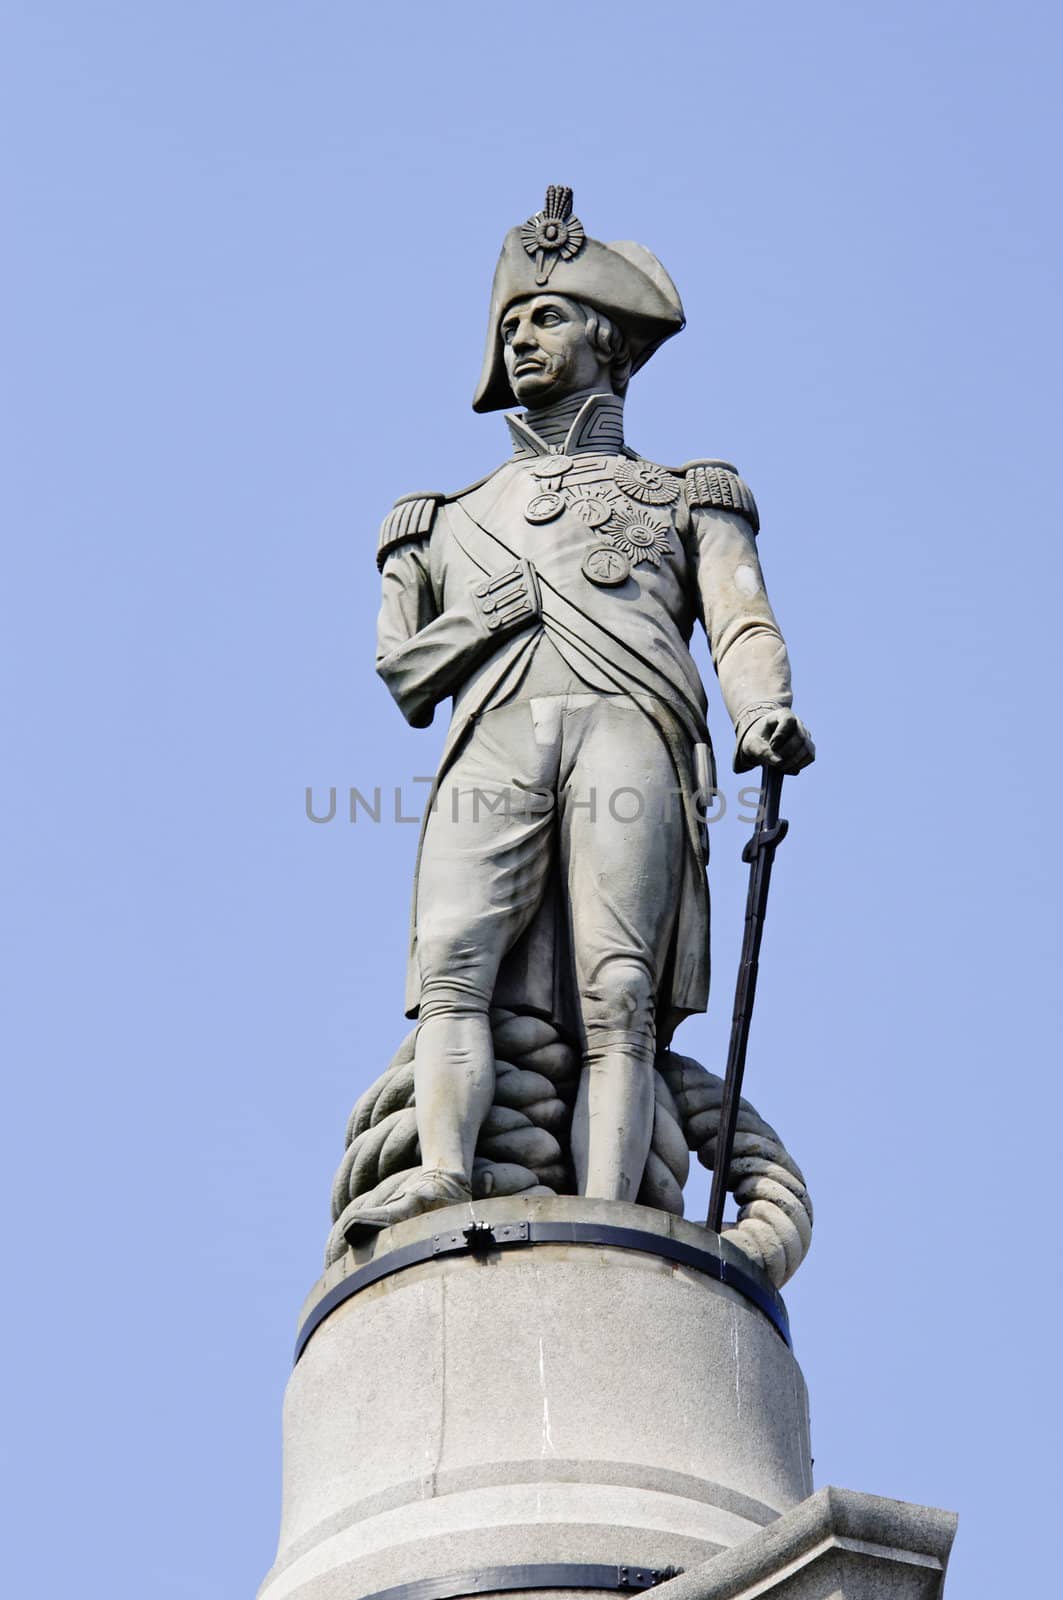 Admiral Nelson statue in London by dutourdumonde